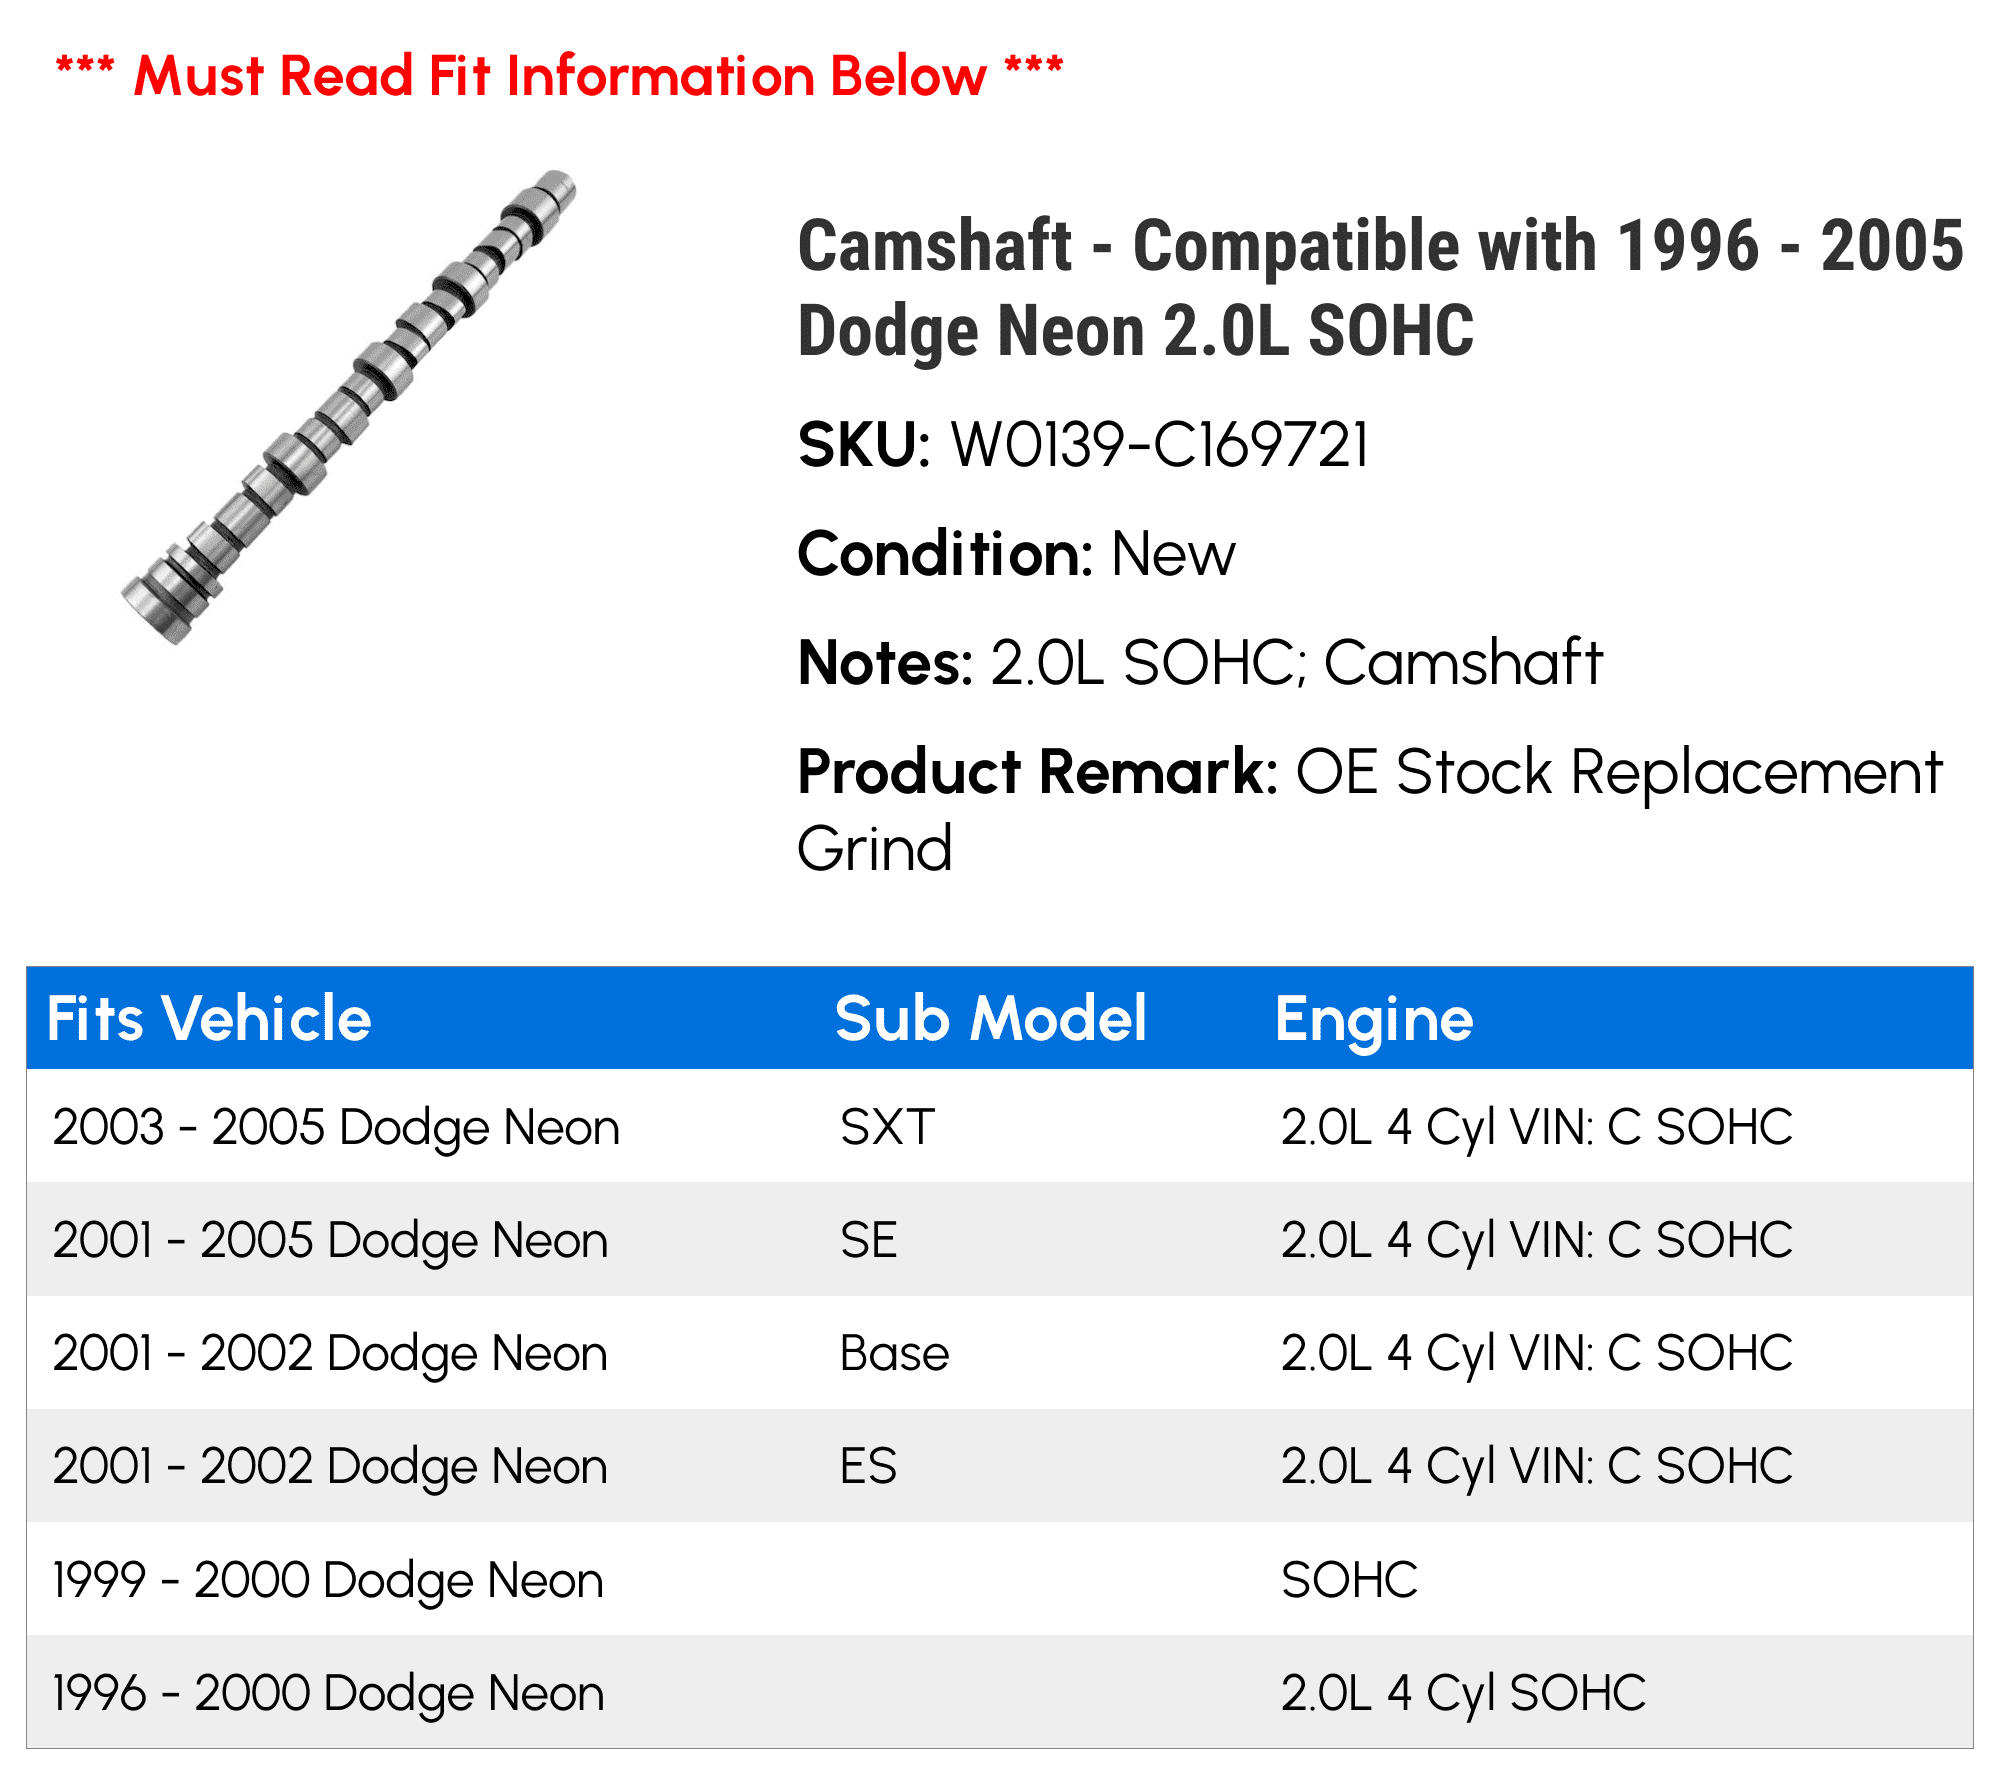 Camshaft Compatible with 1996-2005 Dodge Neon 2.0L SOHC 